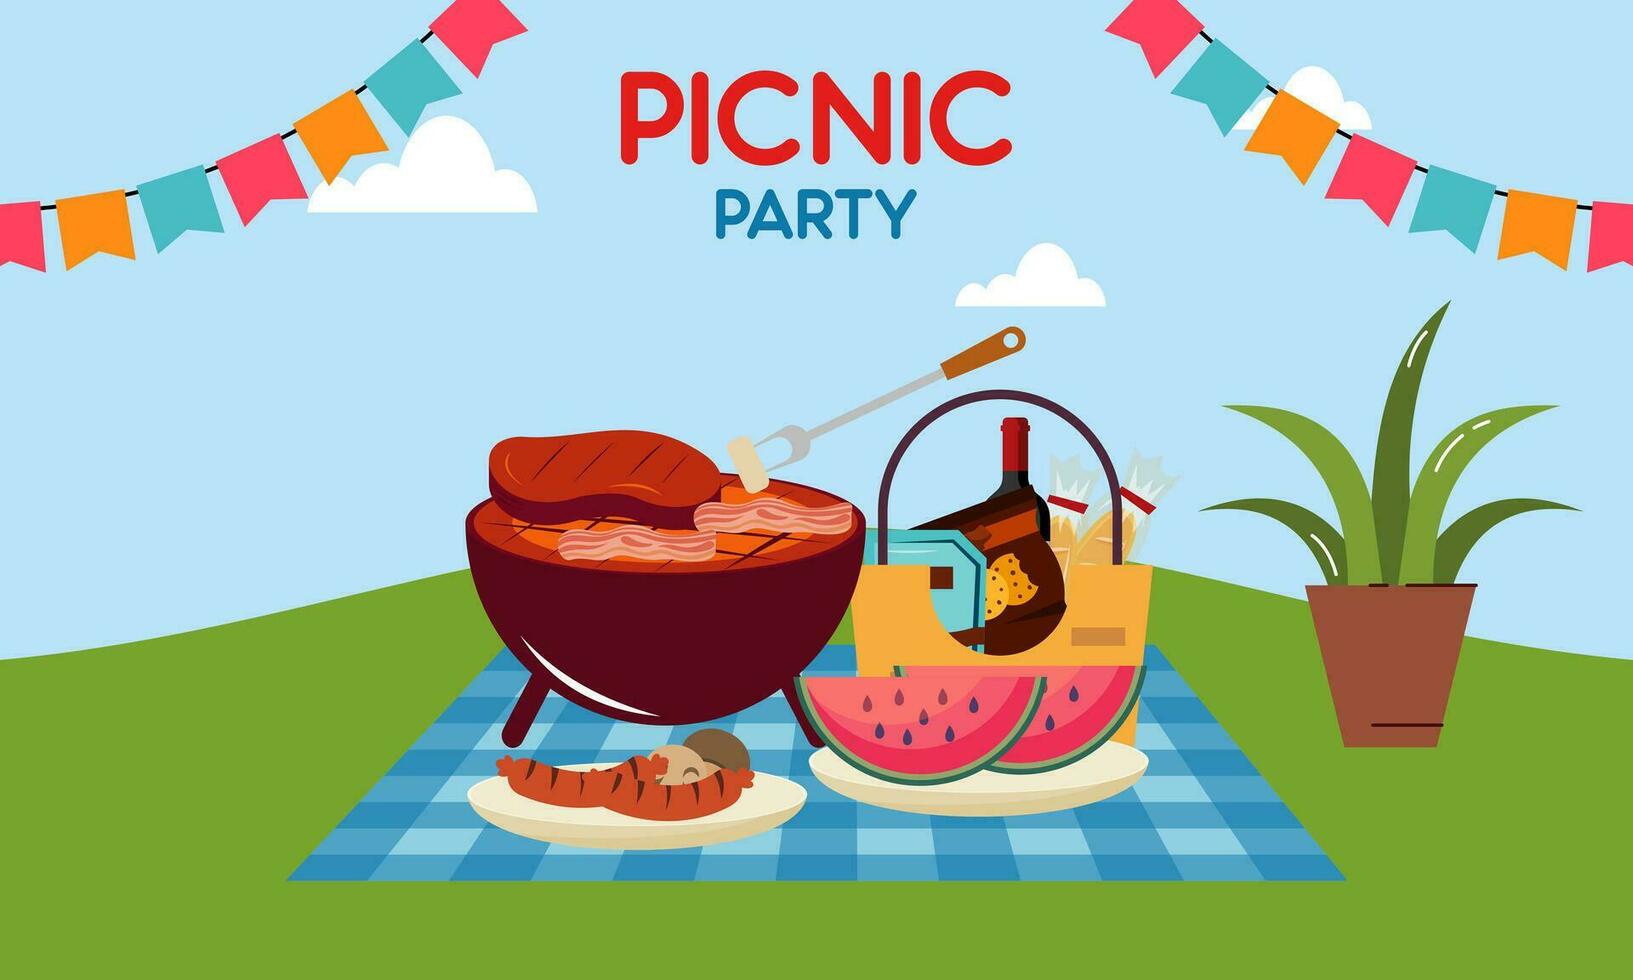 Picnic party celebration scene illustration vector